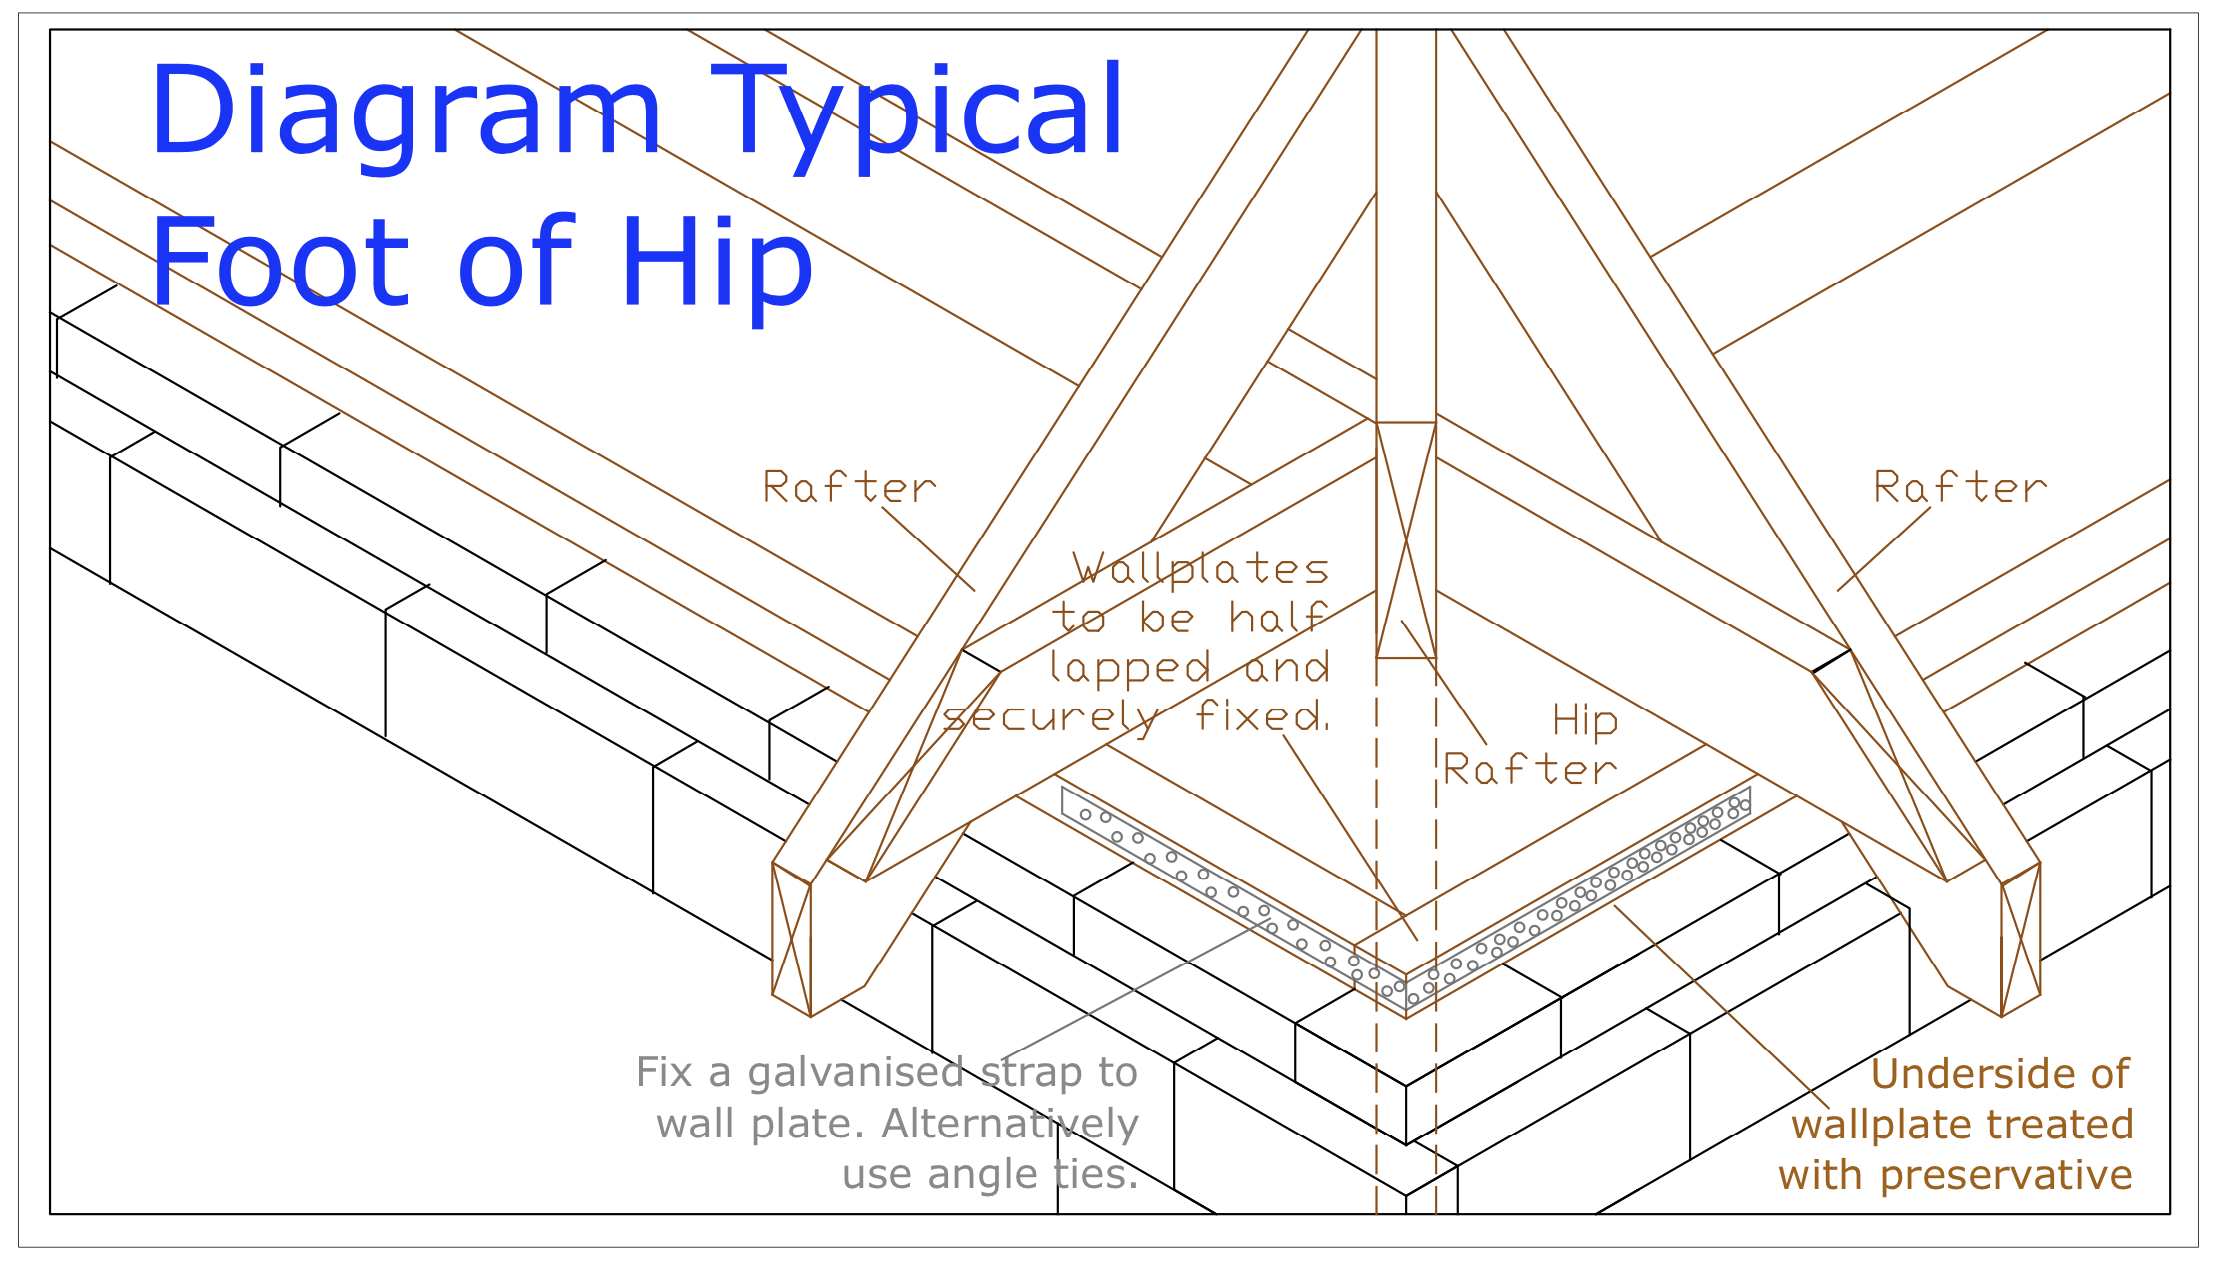 Diagram D34 - Foot of hip